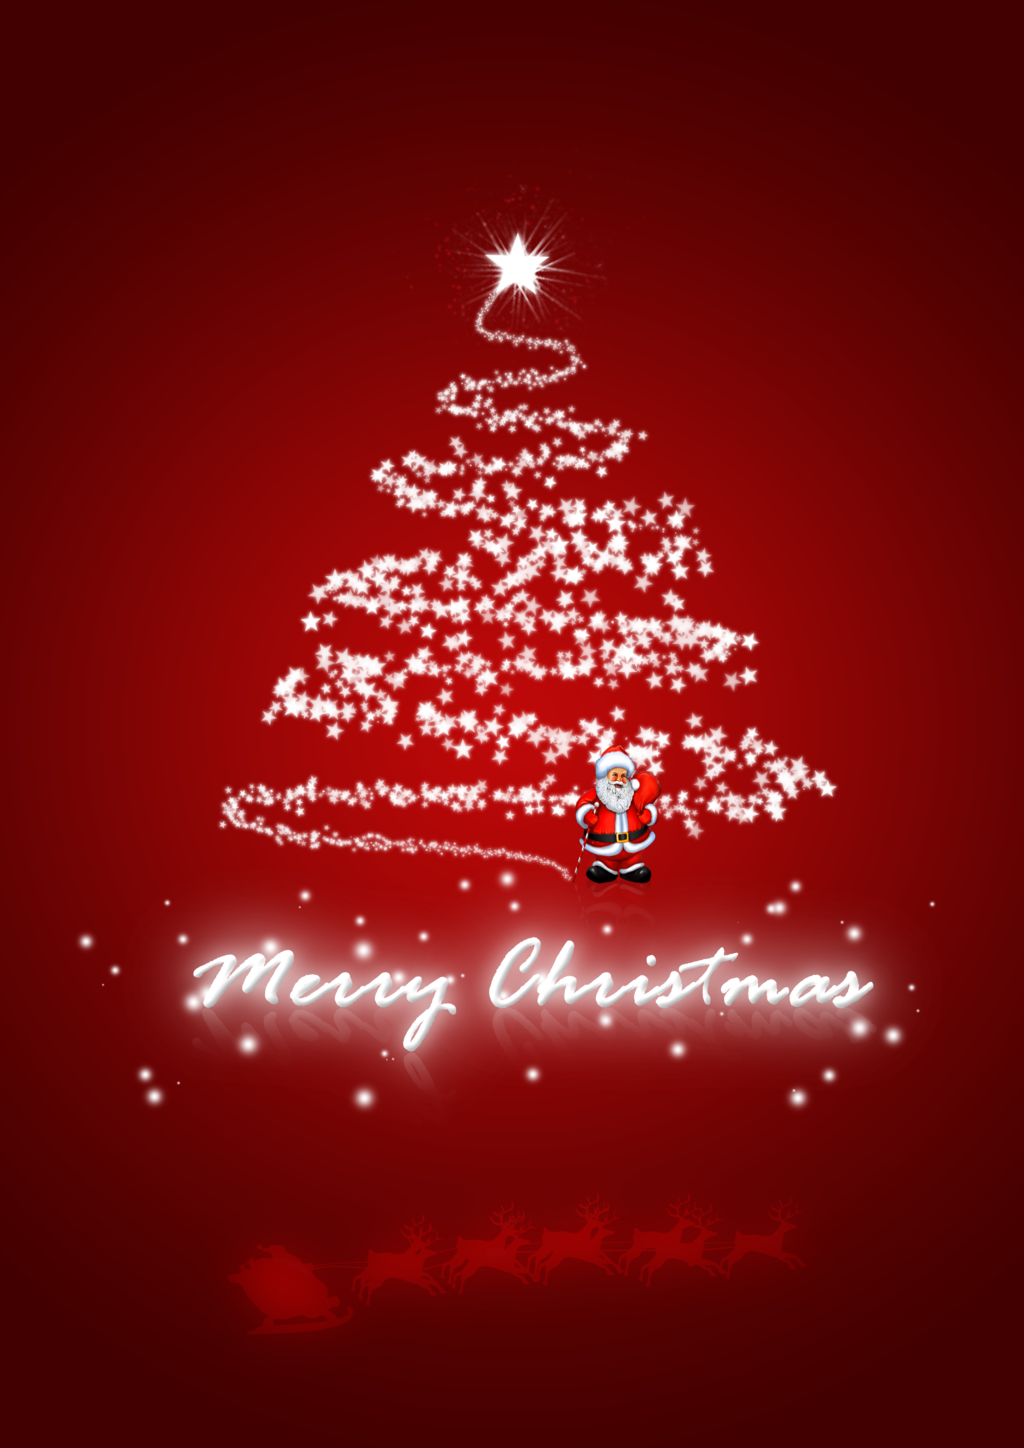 http://4.bp.blogspot.com/-xoqQYlIwe1U/TvRJ2fEtrpI/AAAAAAAAAEo/TDZ6jEWl1kk/s1600/Merry_Christmas_by_maniek_07.png#Merry%20Christmas%20everyone%201024x1448